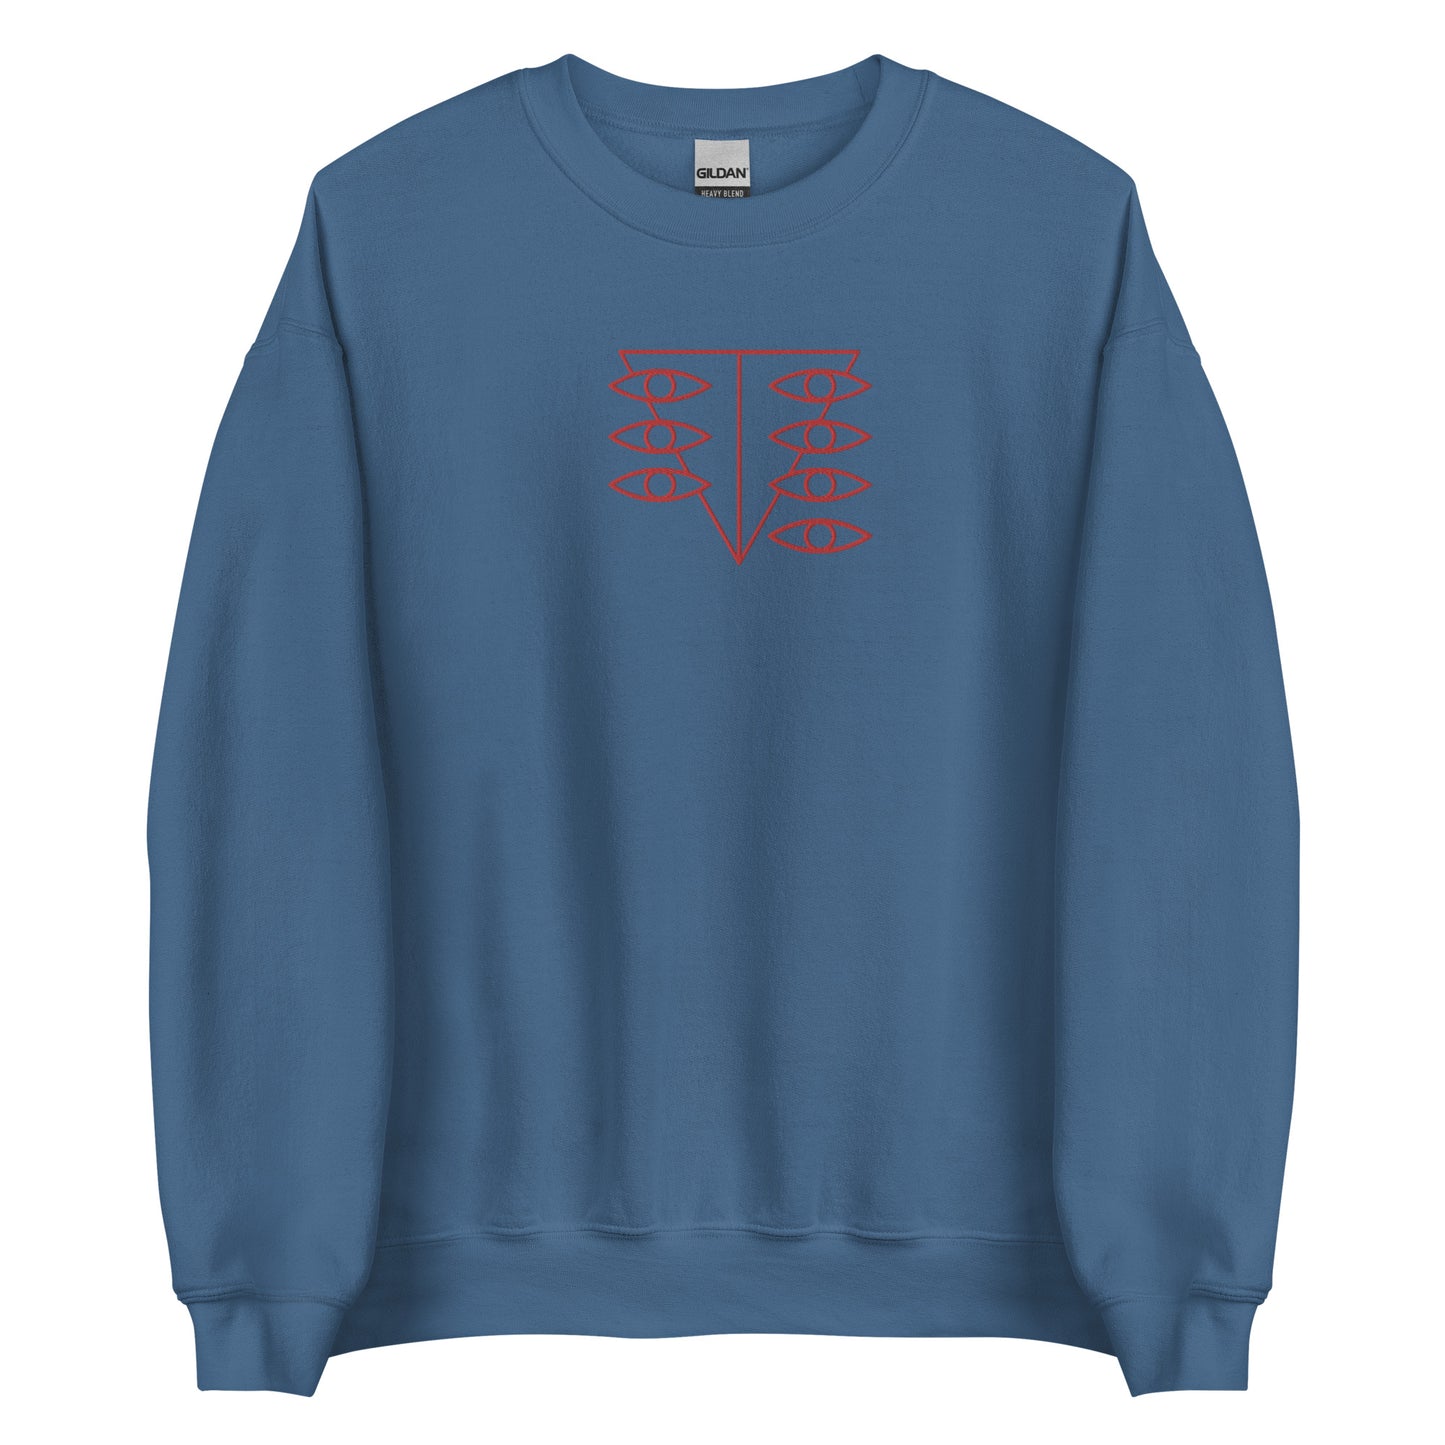 Seele embroidered Sweatshirt crew neck